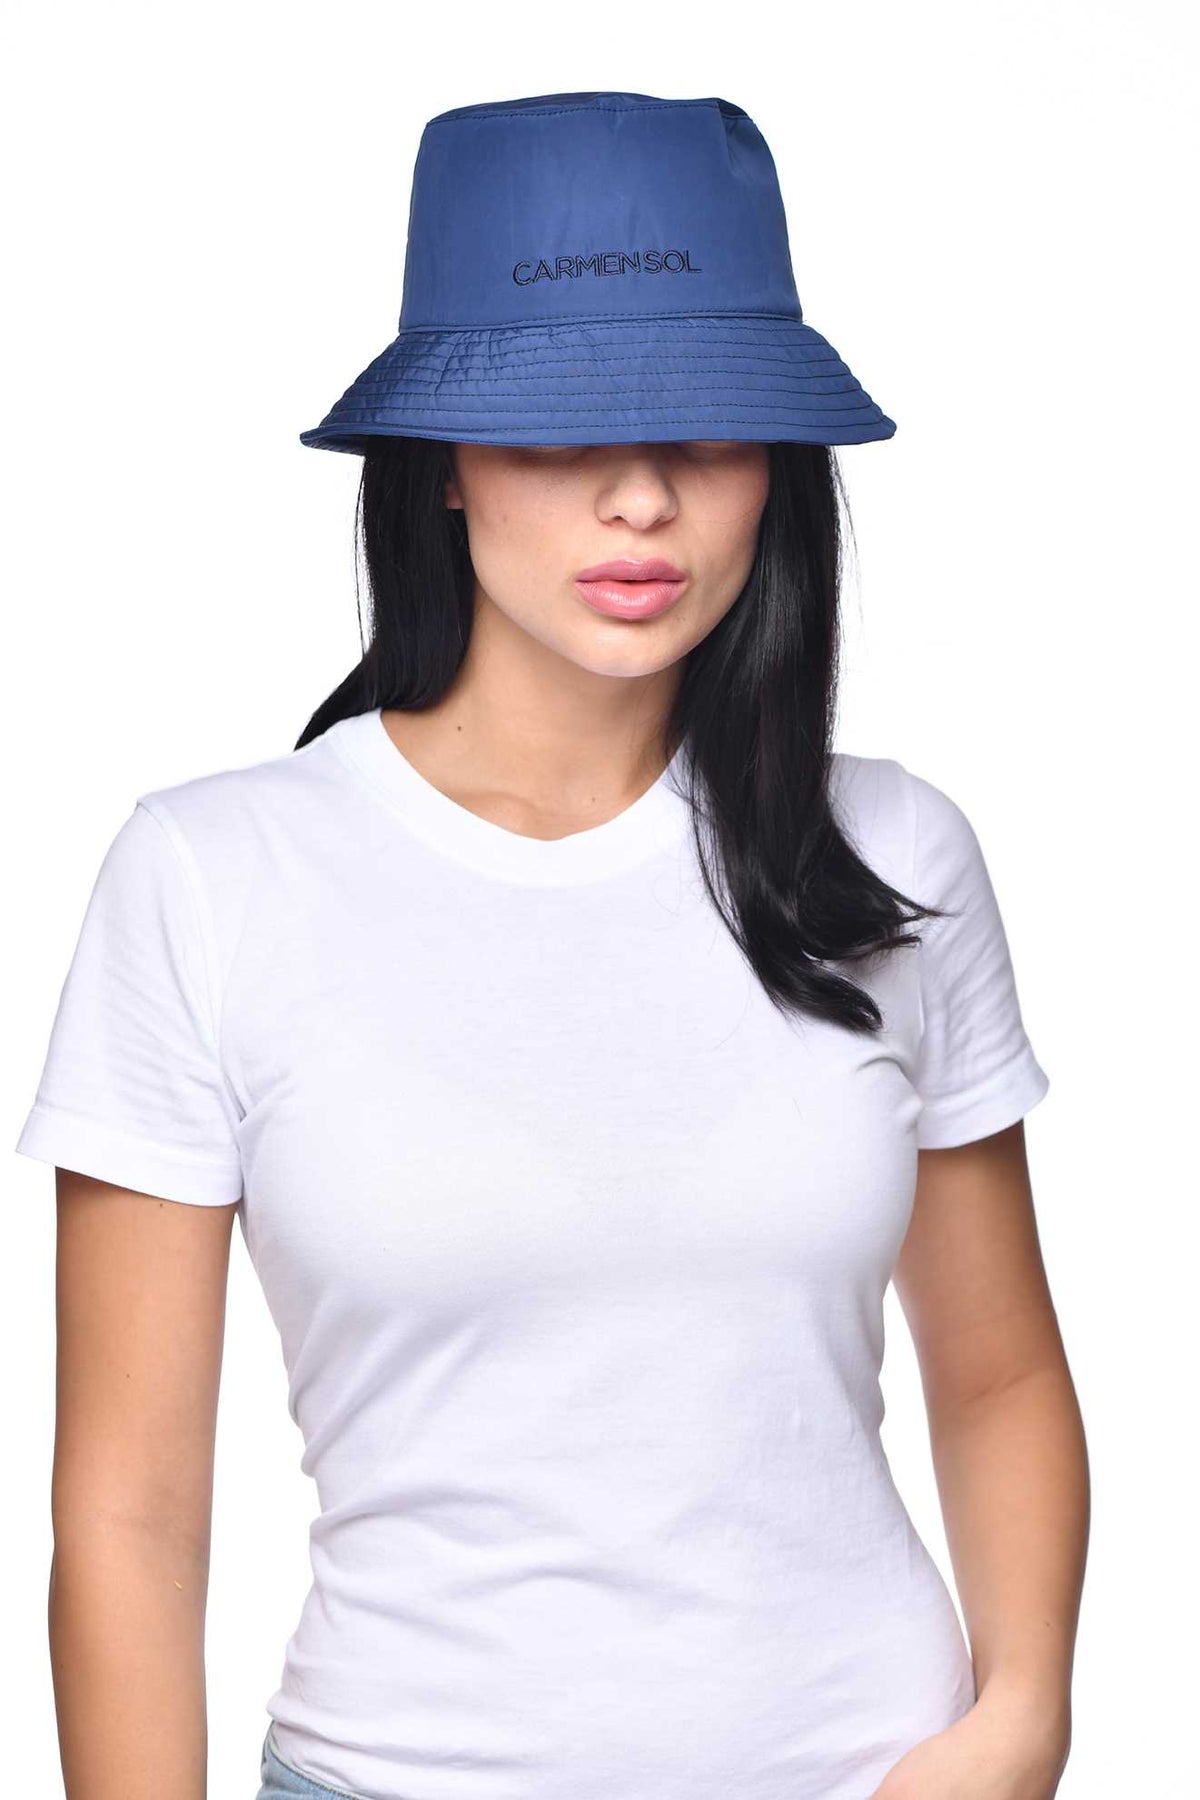 Carmen Sol Raquel nylon sun hat in color navy blue